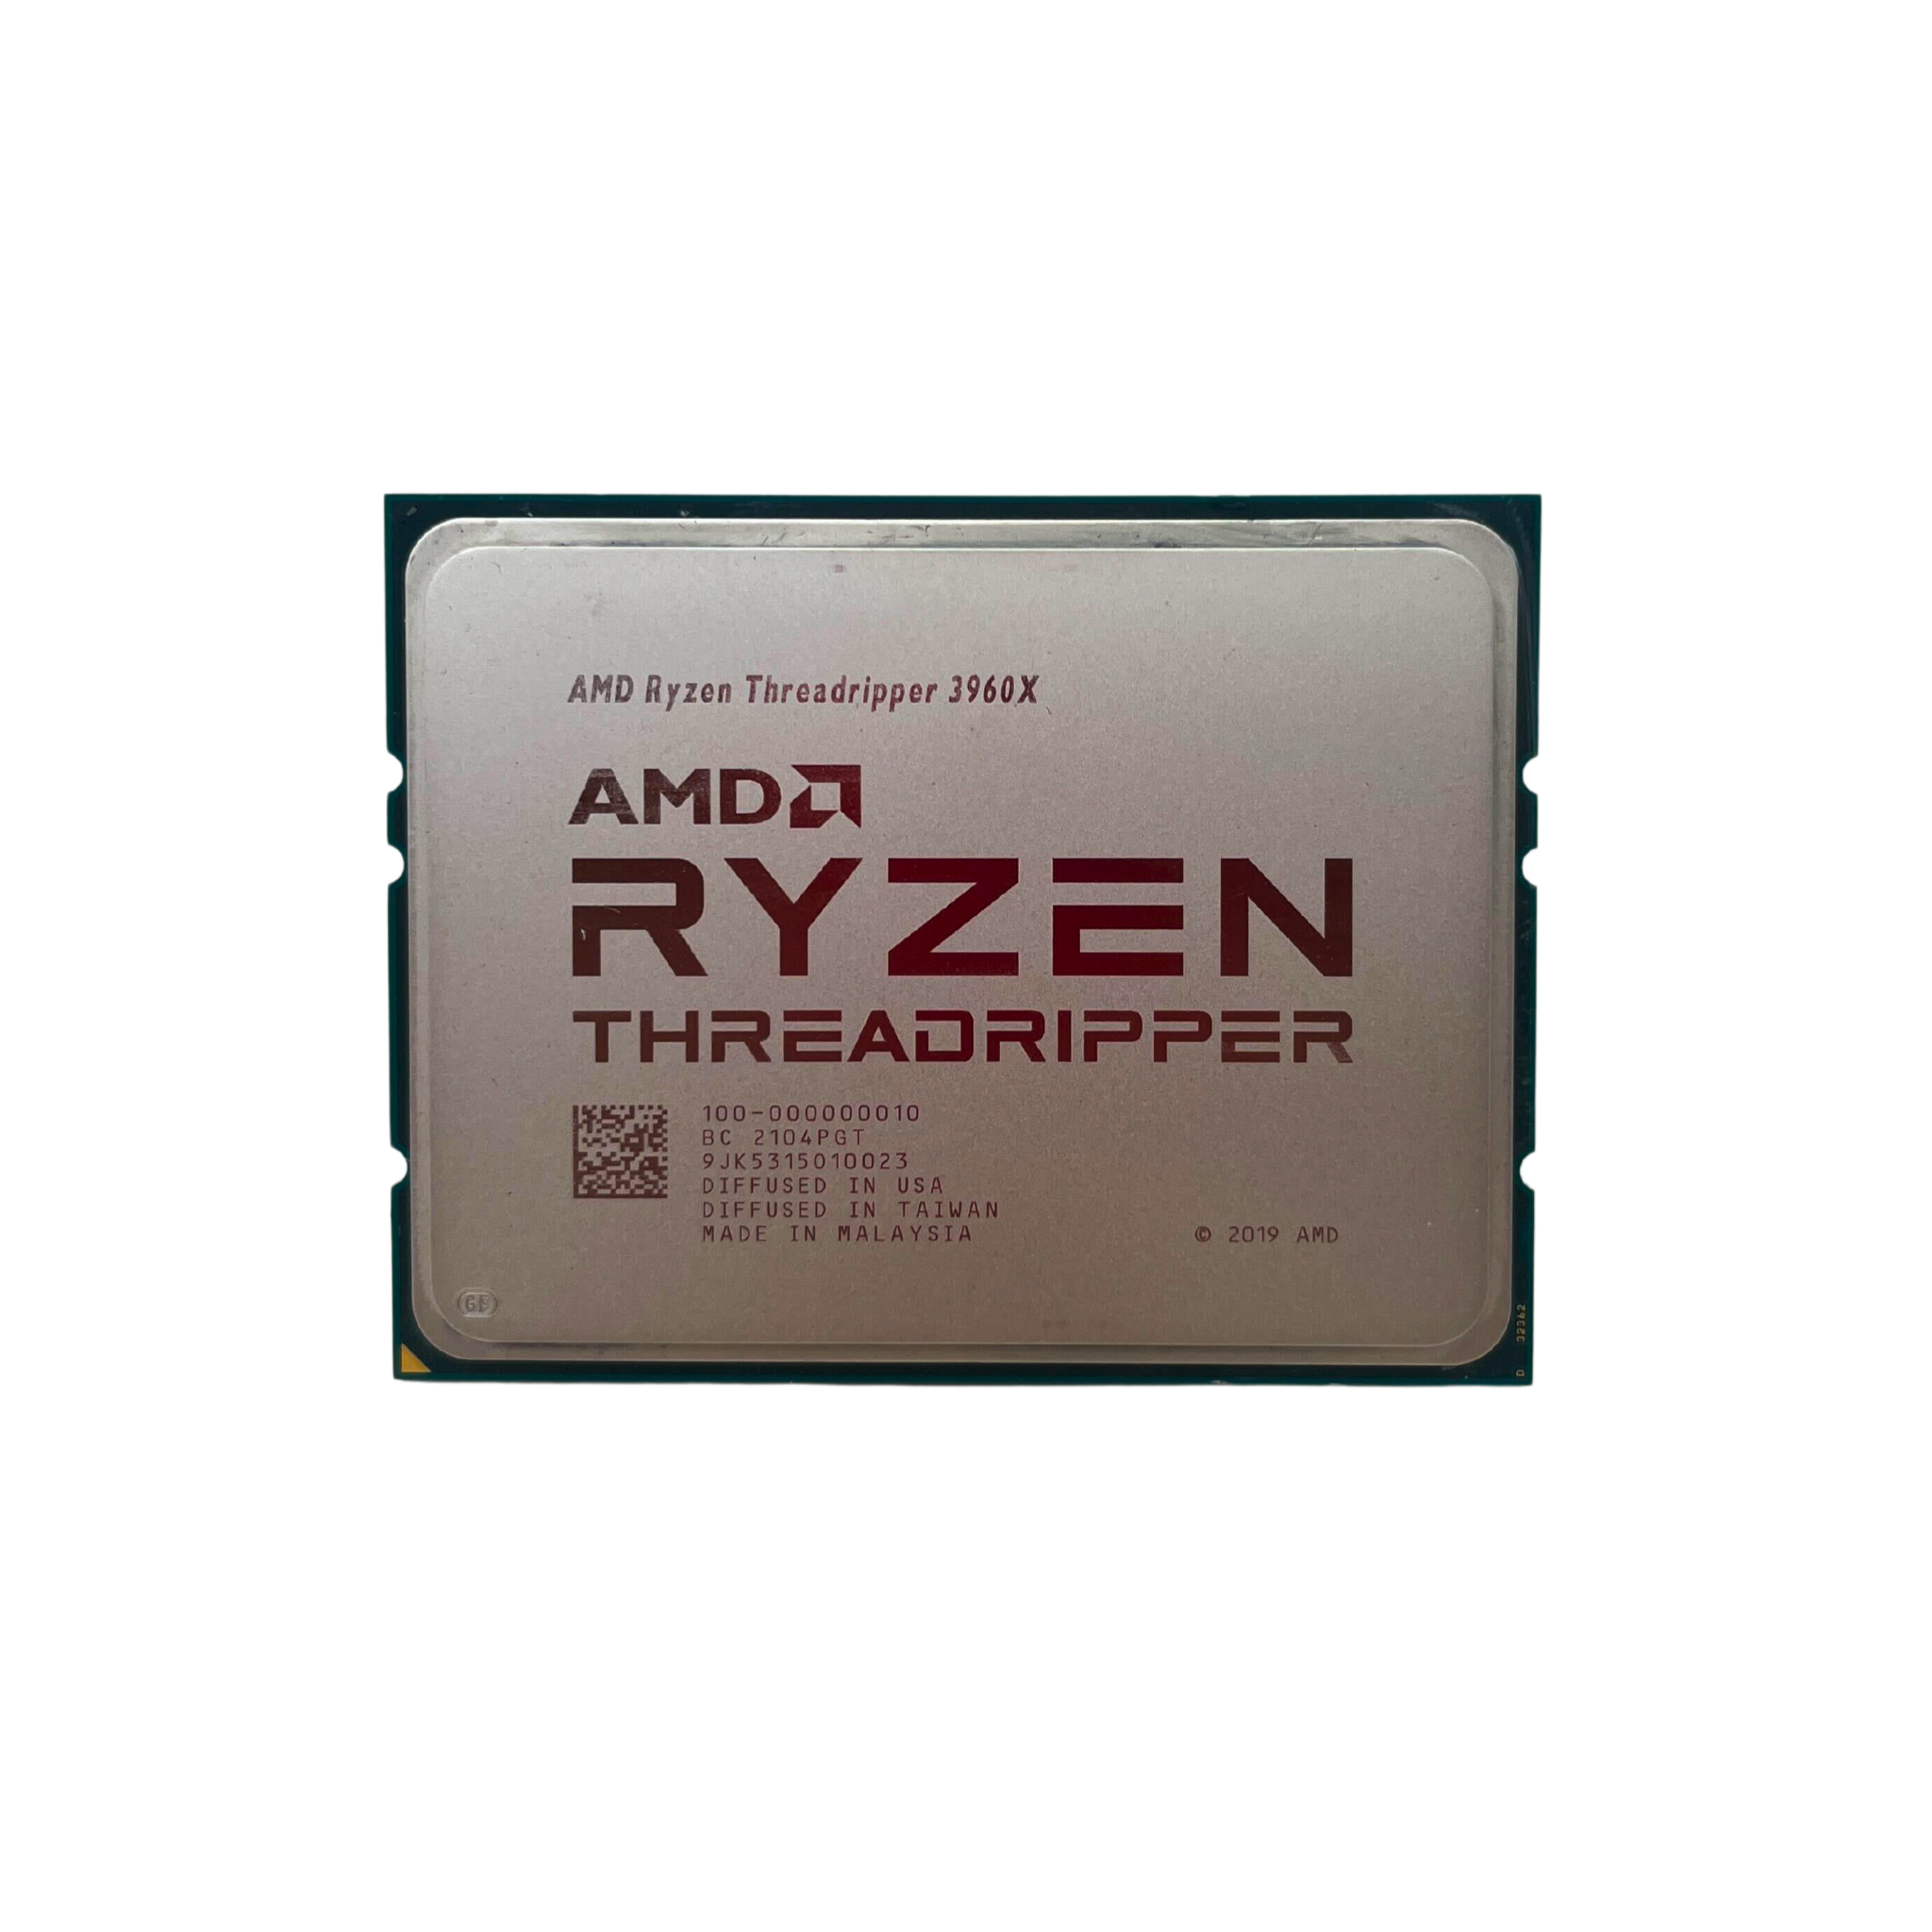 AMD Ryzen Threadripper 24 core 3960X processors Up to 4.5/3.8 100-000000010 (3960X)